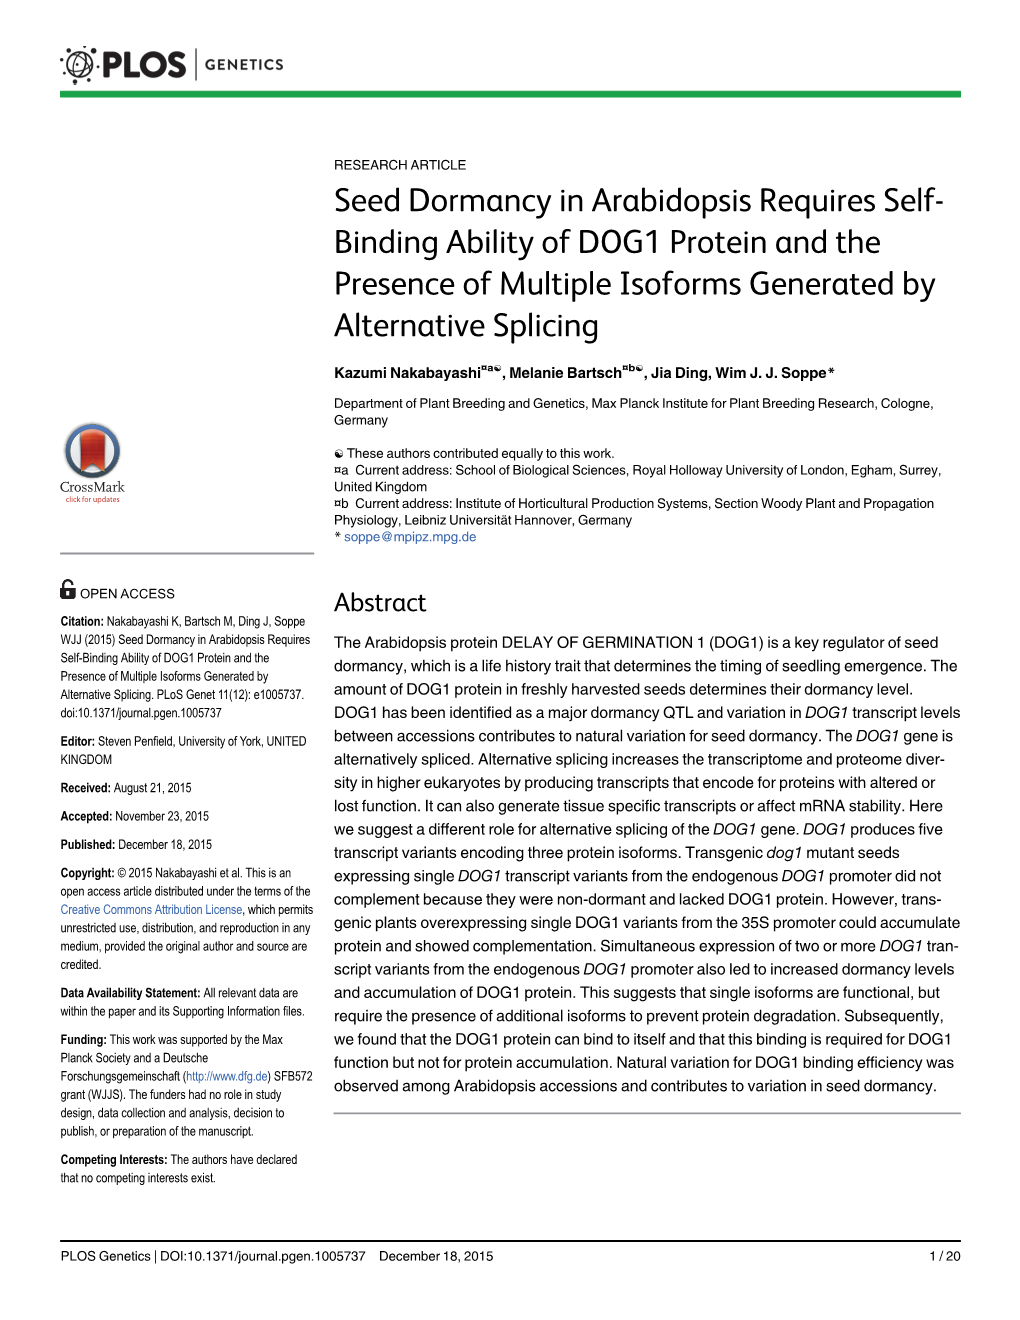 Seed Dormancy in Arabidopsis Requires Self-Binding Ability Of